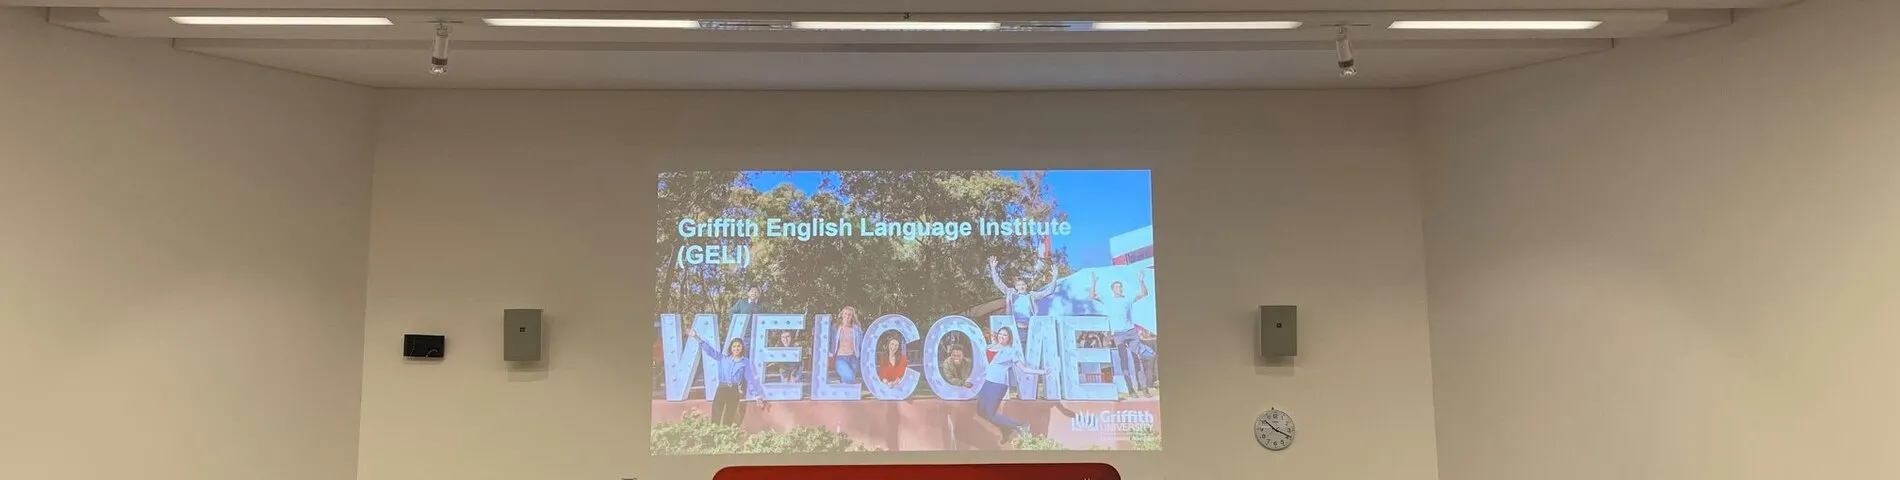 Imagen 1 de la escuela Griffith English Language Institute